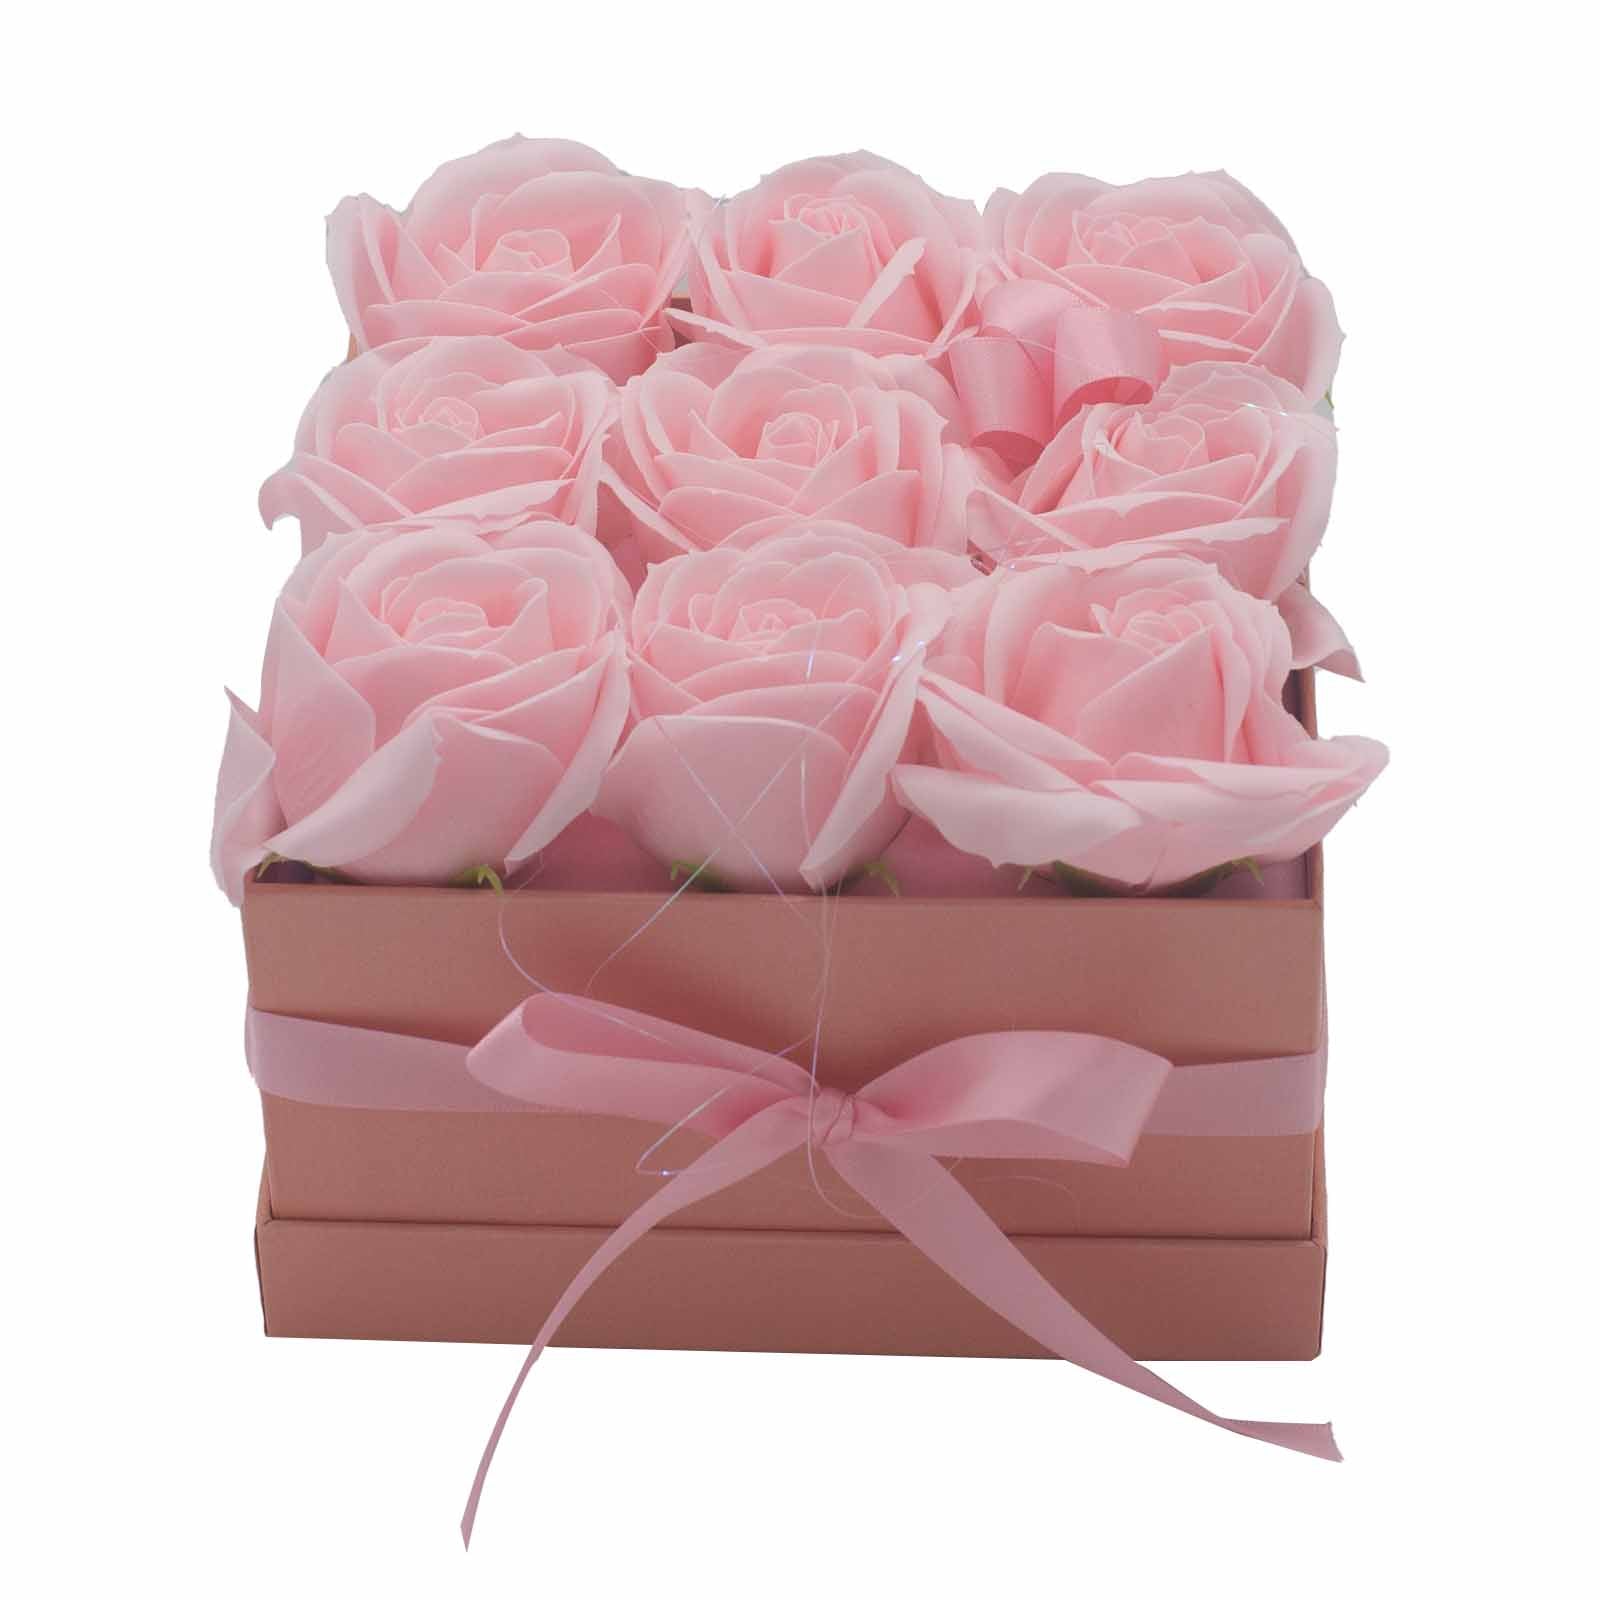 doen alsof ballet harpoen Roze zeeprozen cadeau box – NUNC8